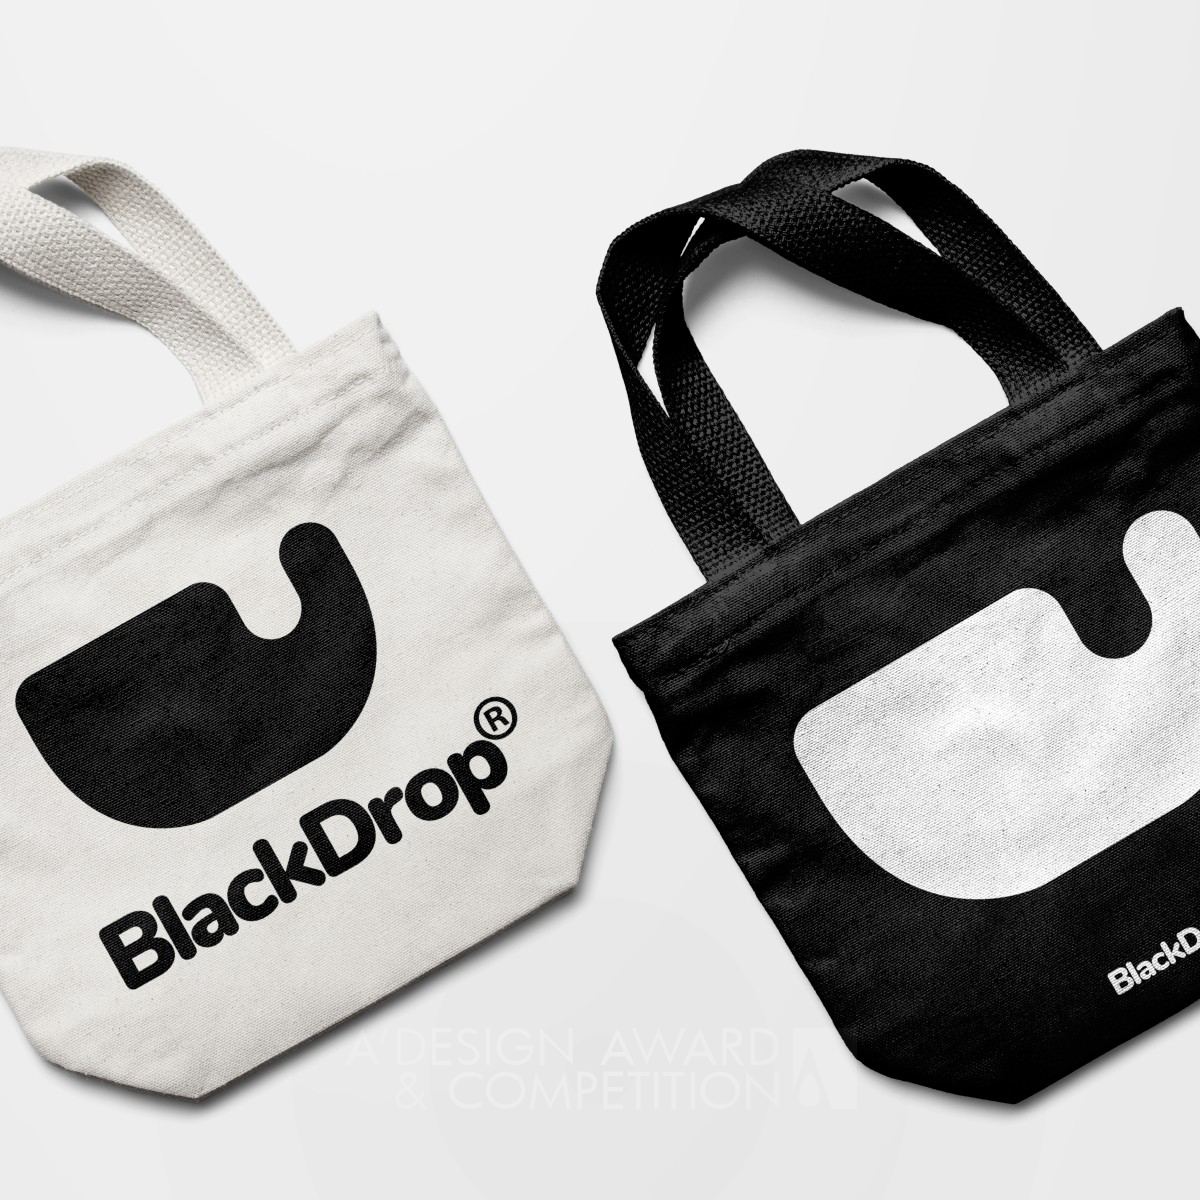 BlackDrop Brand Identity